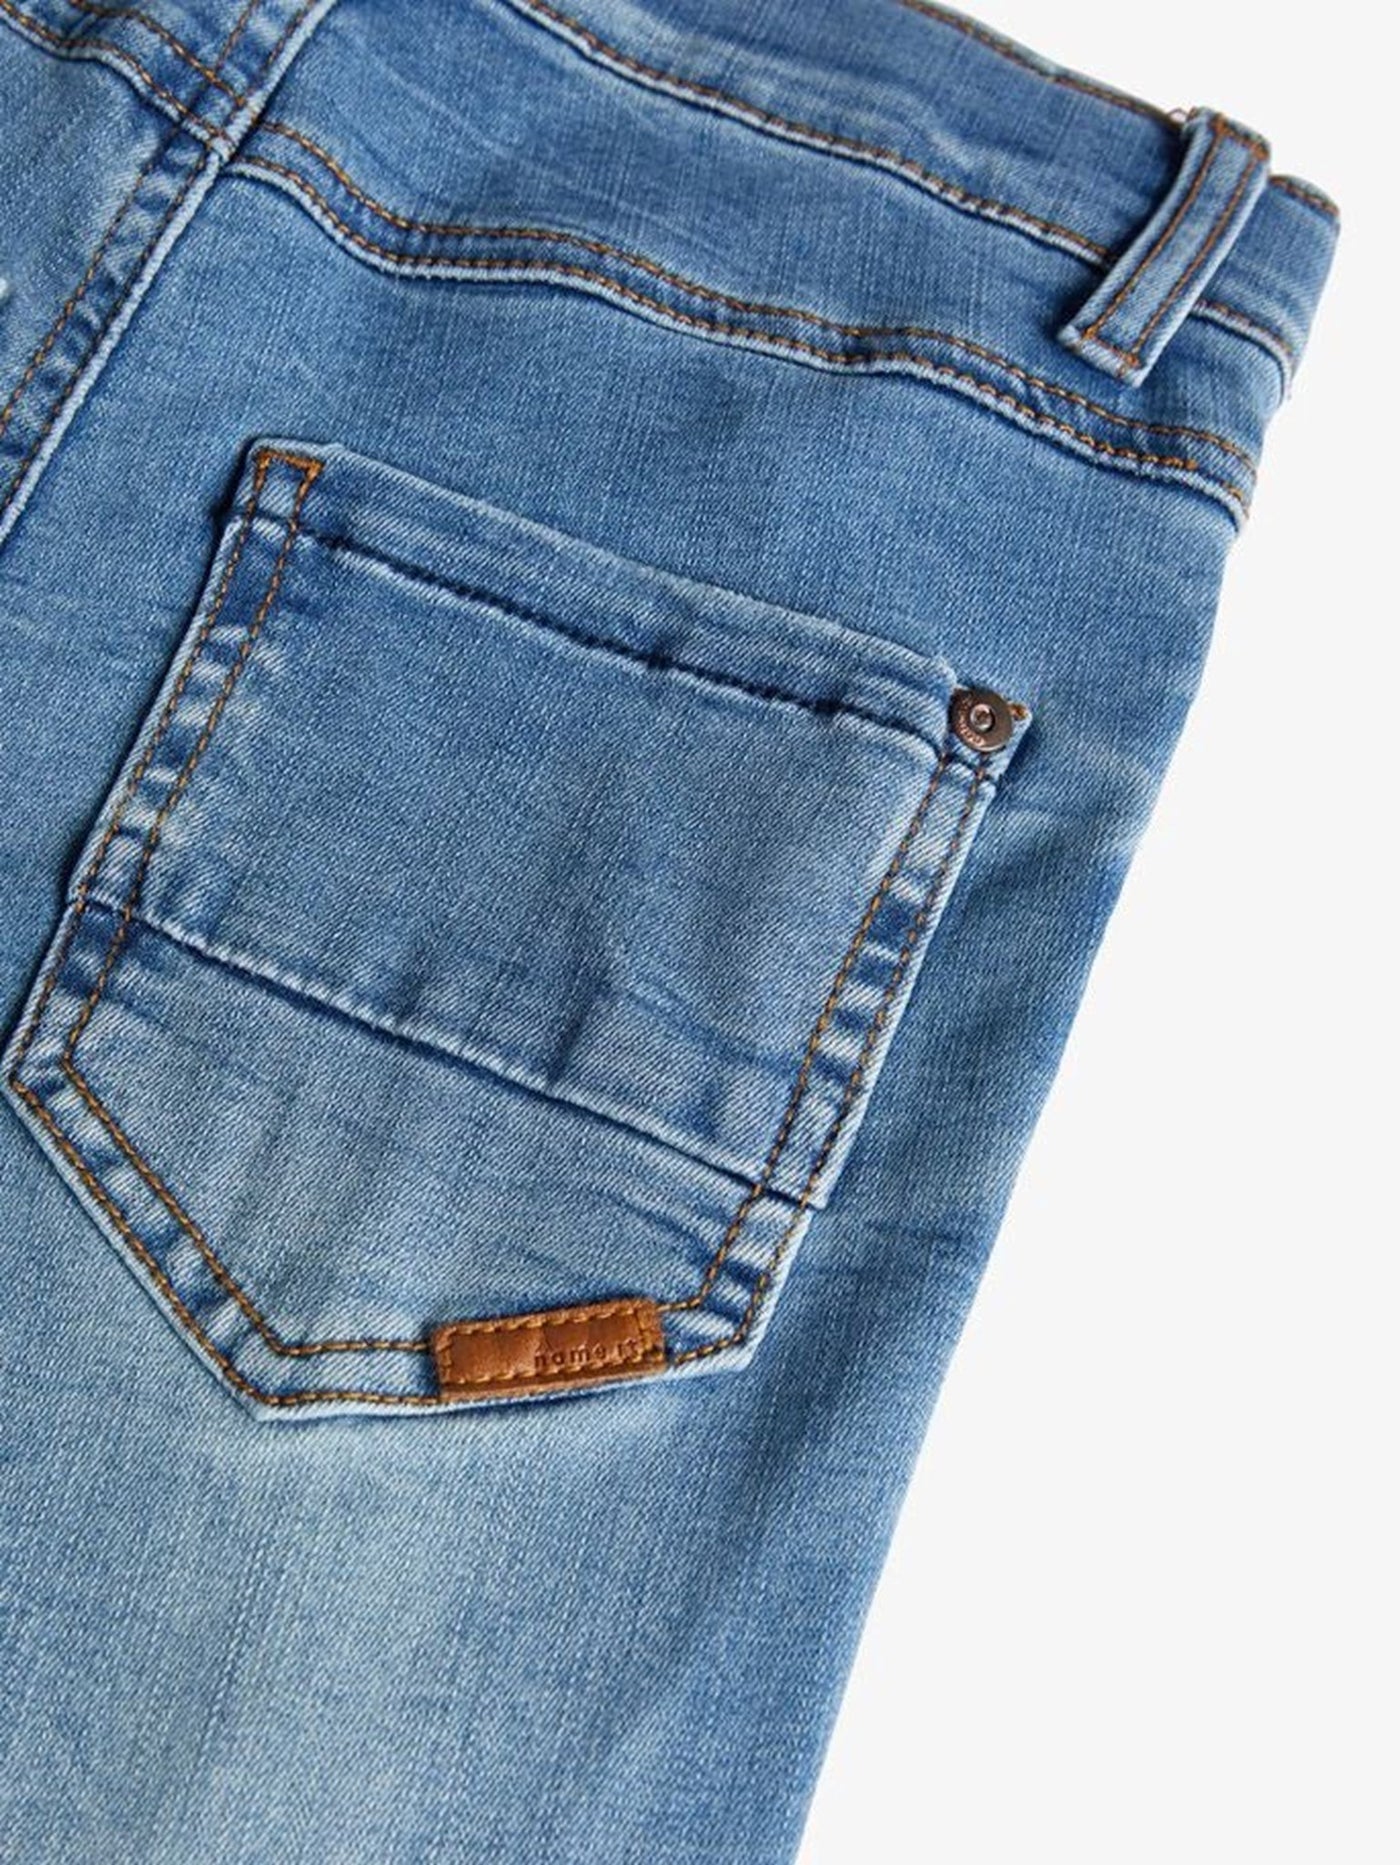 X-Slim Fit Ripped Jeans - Light Blue Denim - Name It 4